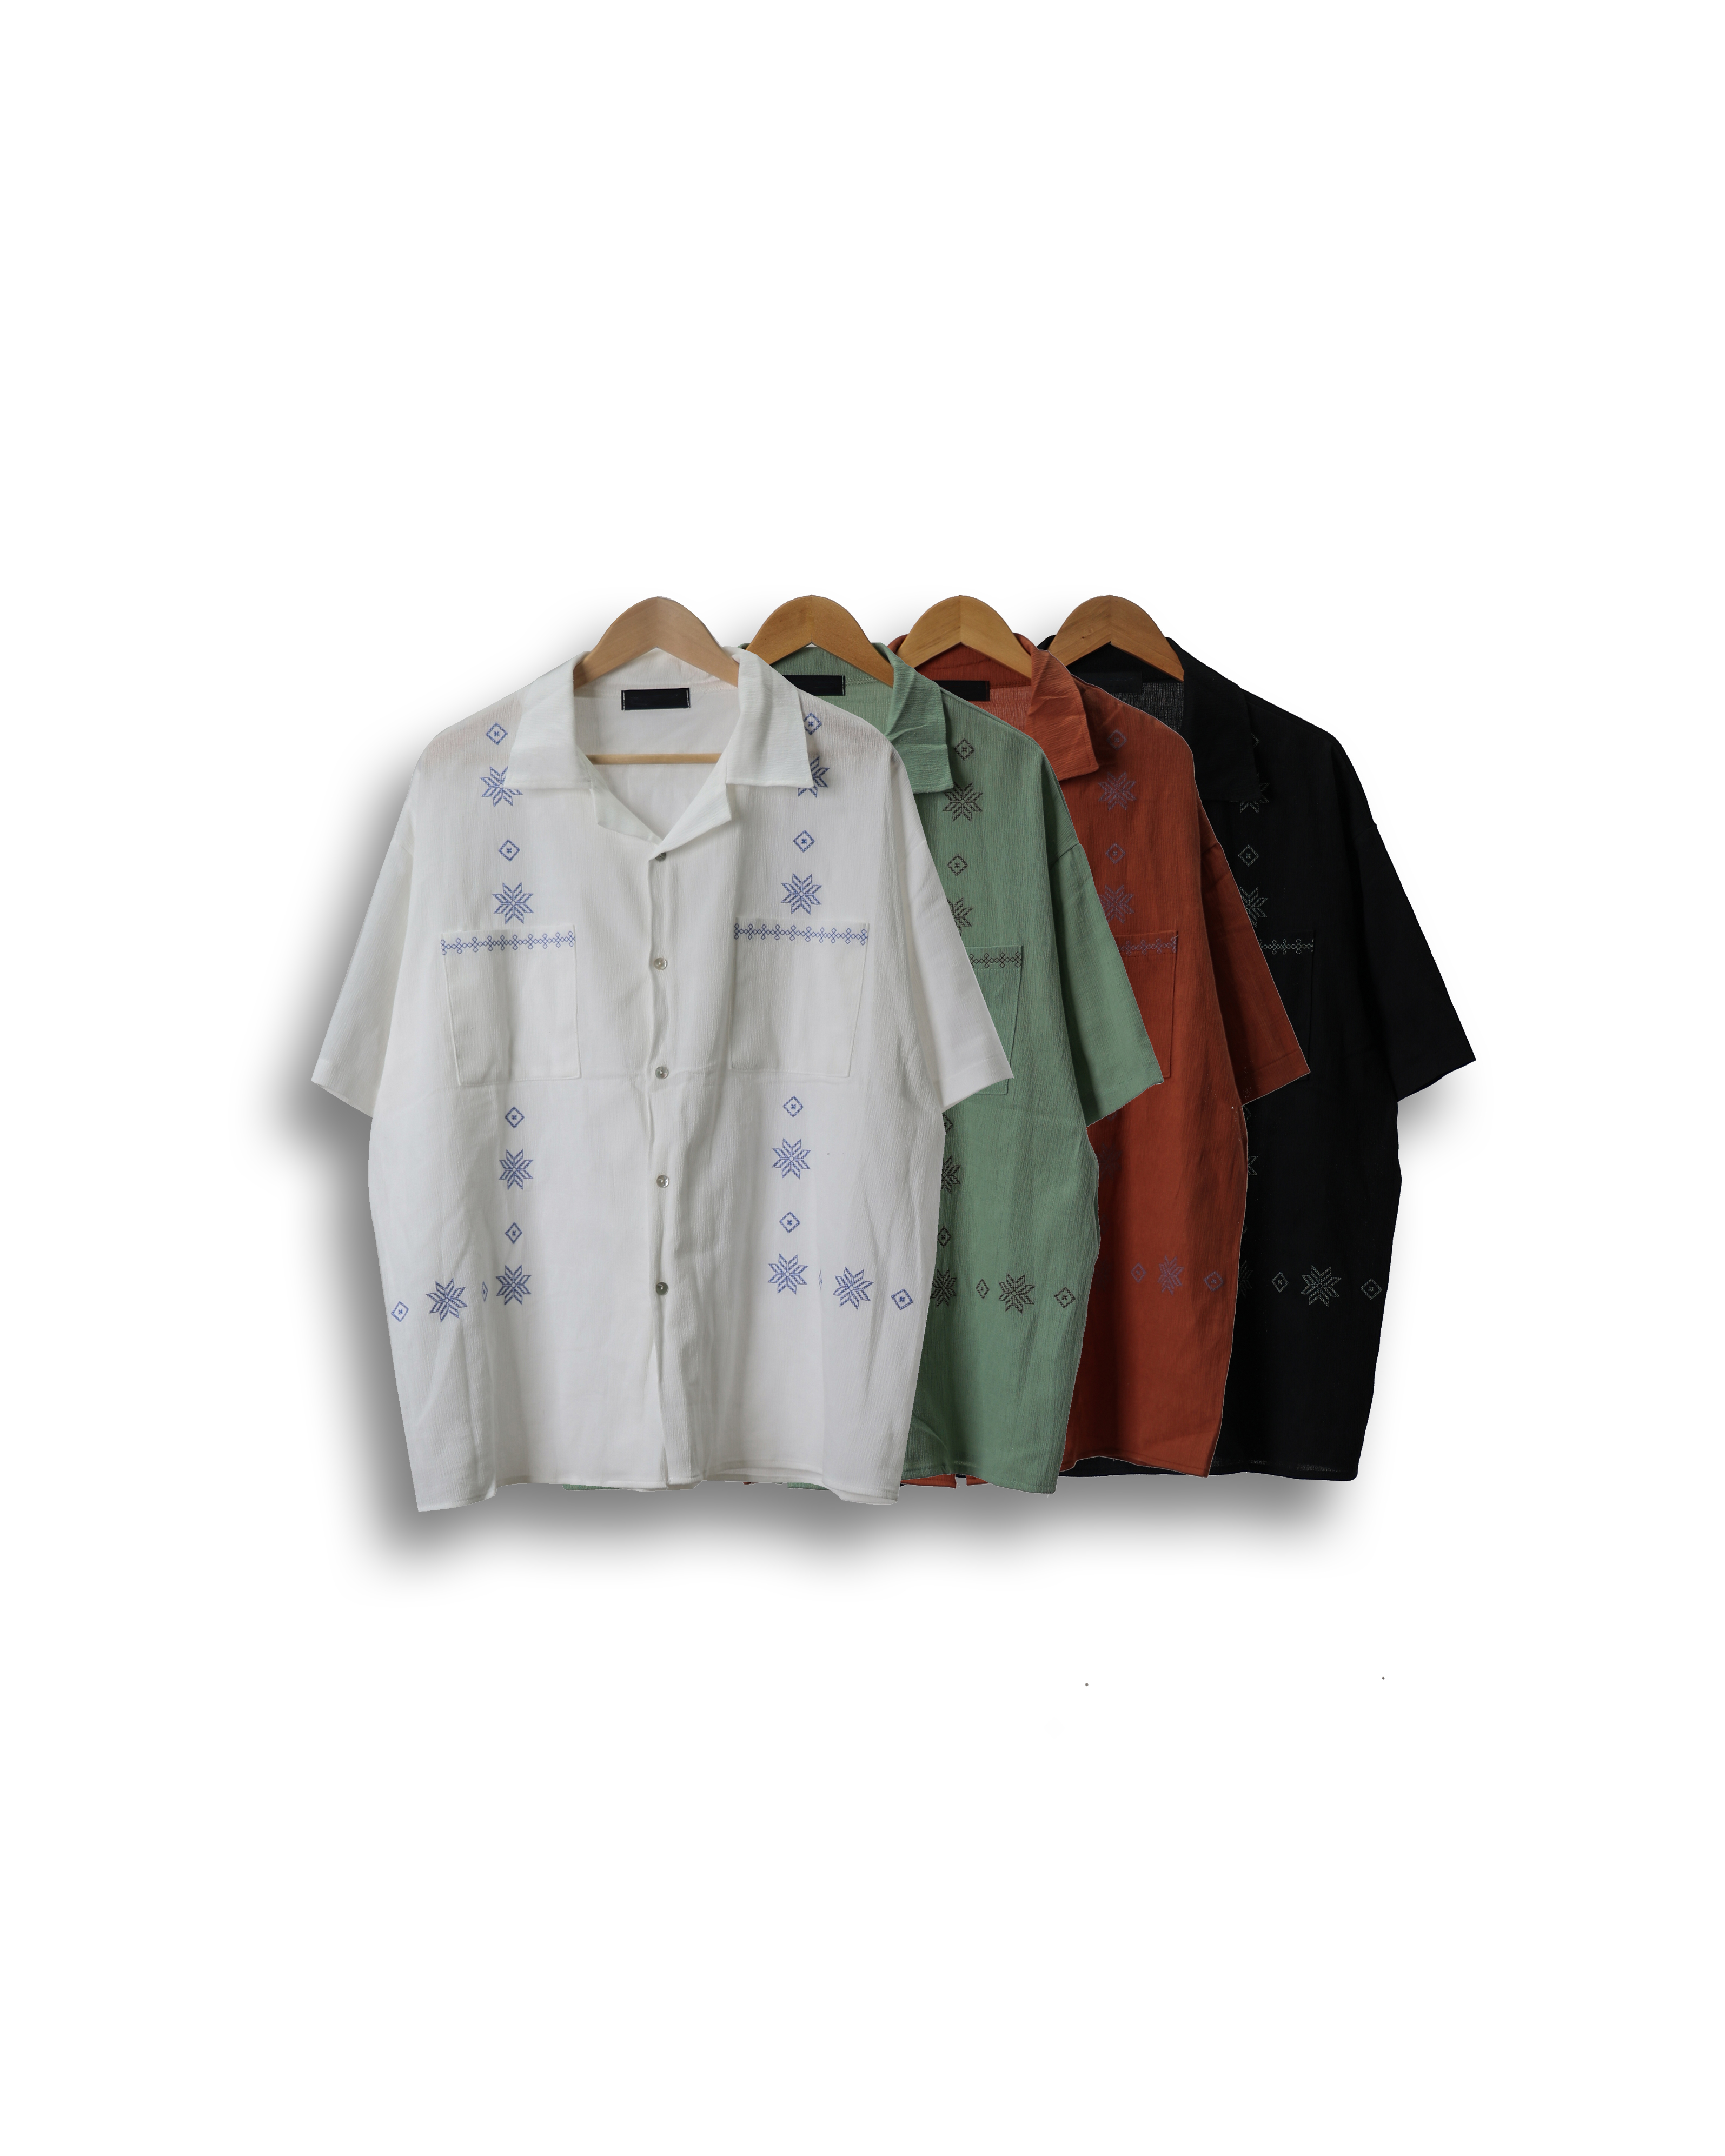 HEX6 Navajo Detailing Half Shirts (Black/Orange Brown/Mint/White)